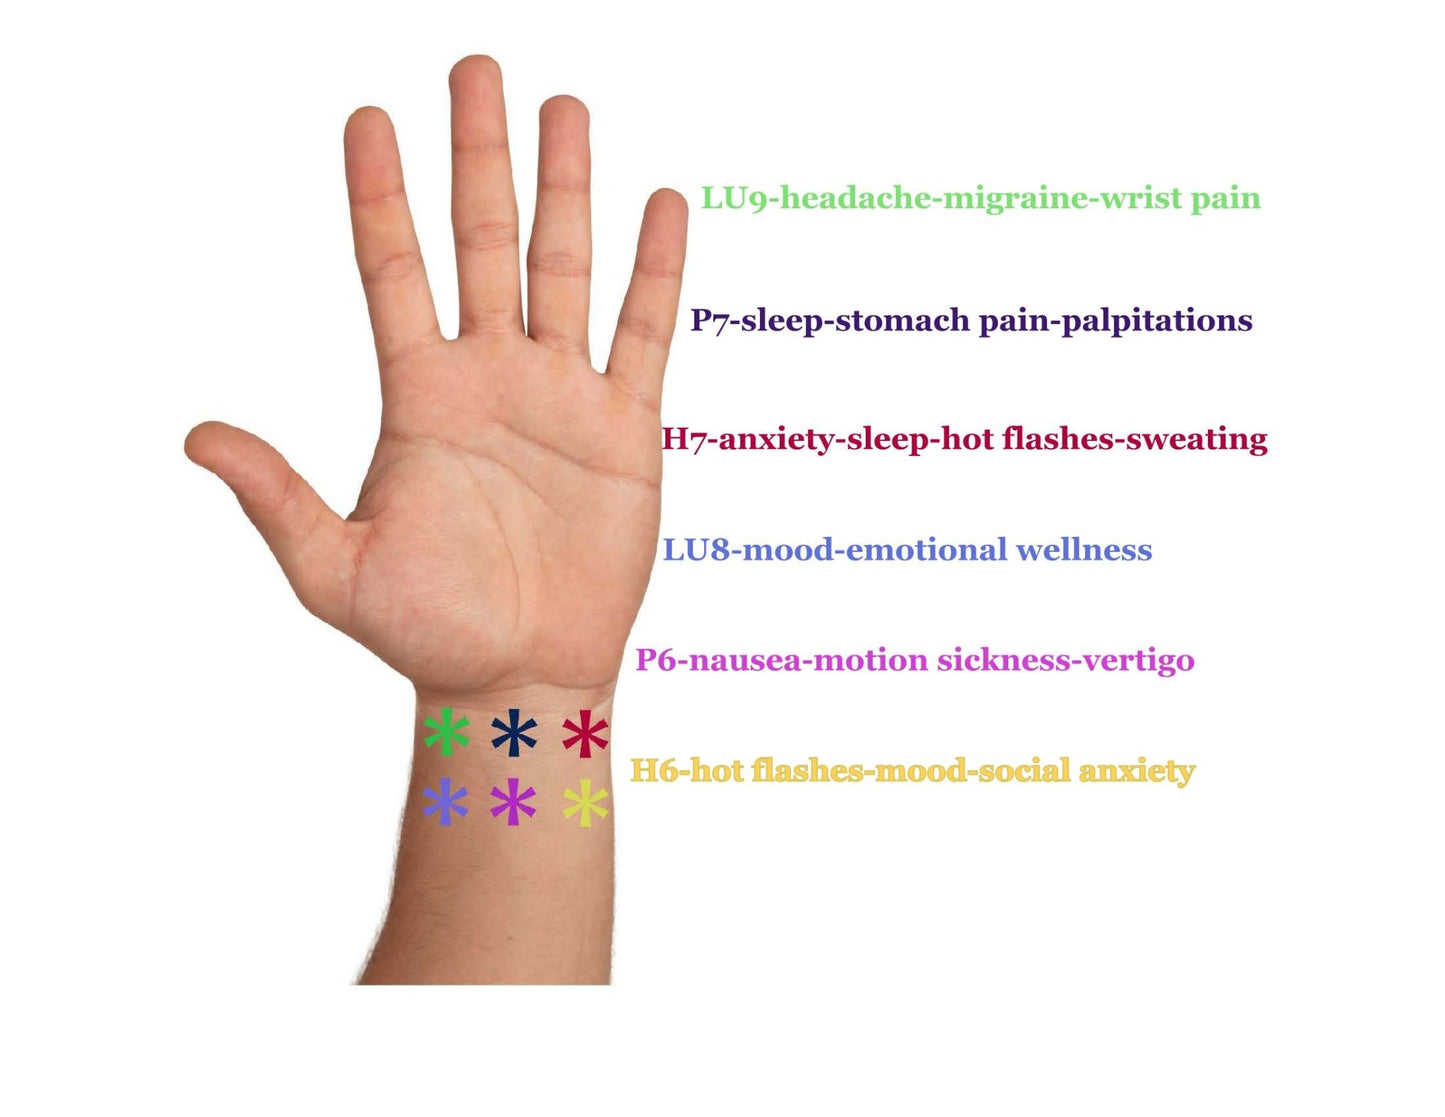 Anxiety Relief Snap Charm Diffuser Bracelet-Scented-Reduces Stress, Vertigo-Multi Symptom Acupressure Band-Mood Support-Balance-Snap Locket Diffuser - Acupressure Bracelets